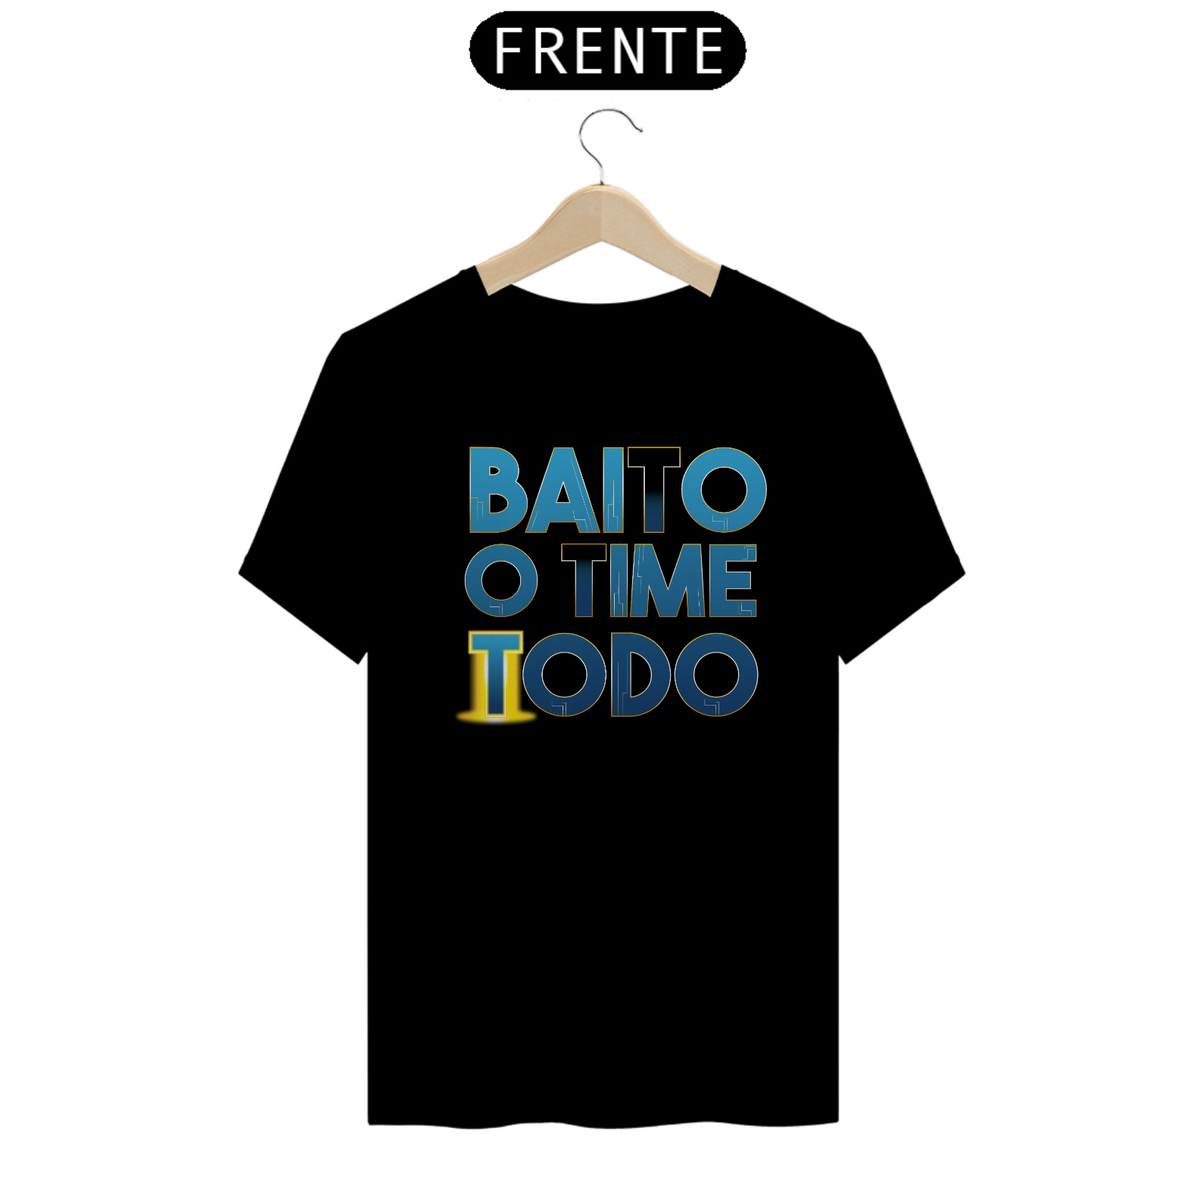 Nome do produto: T-shirt - Baito o Time